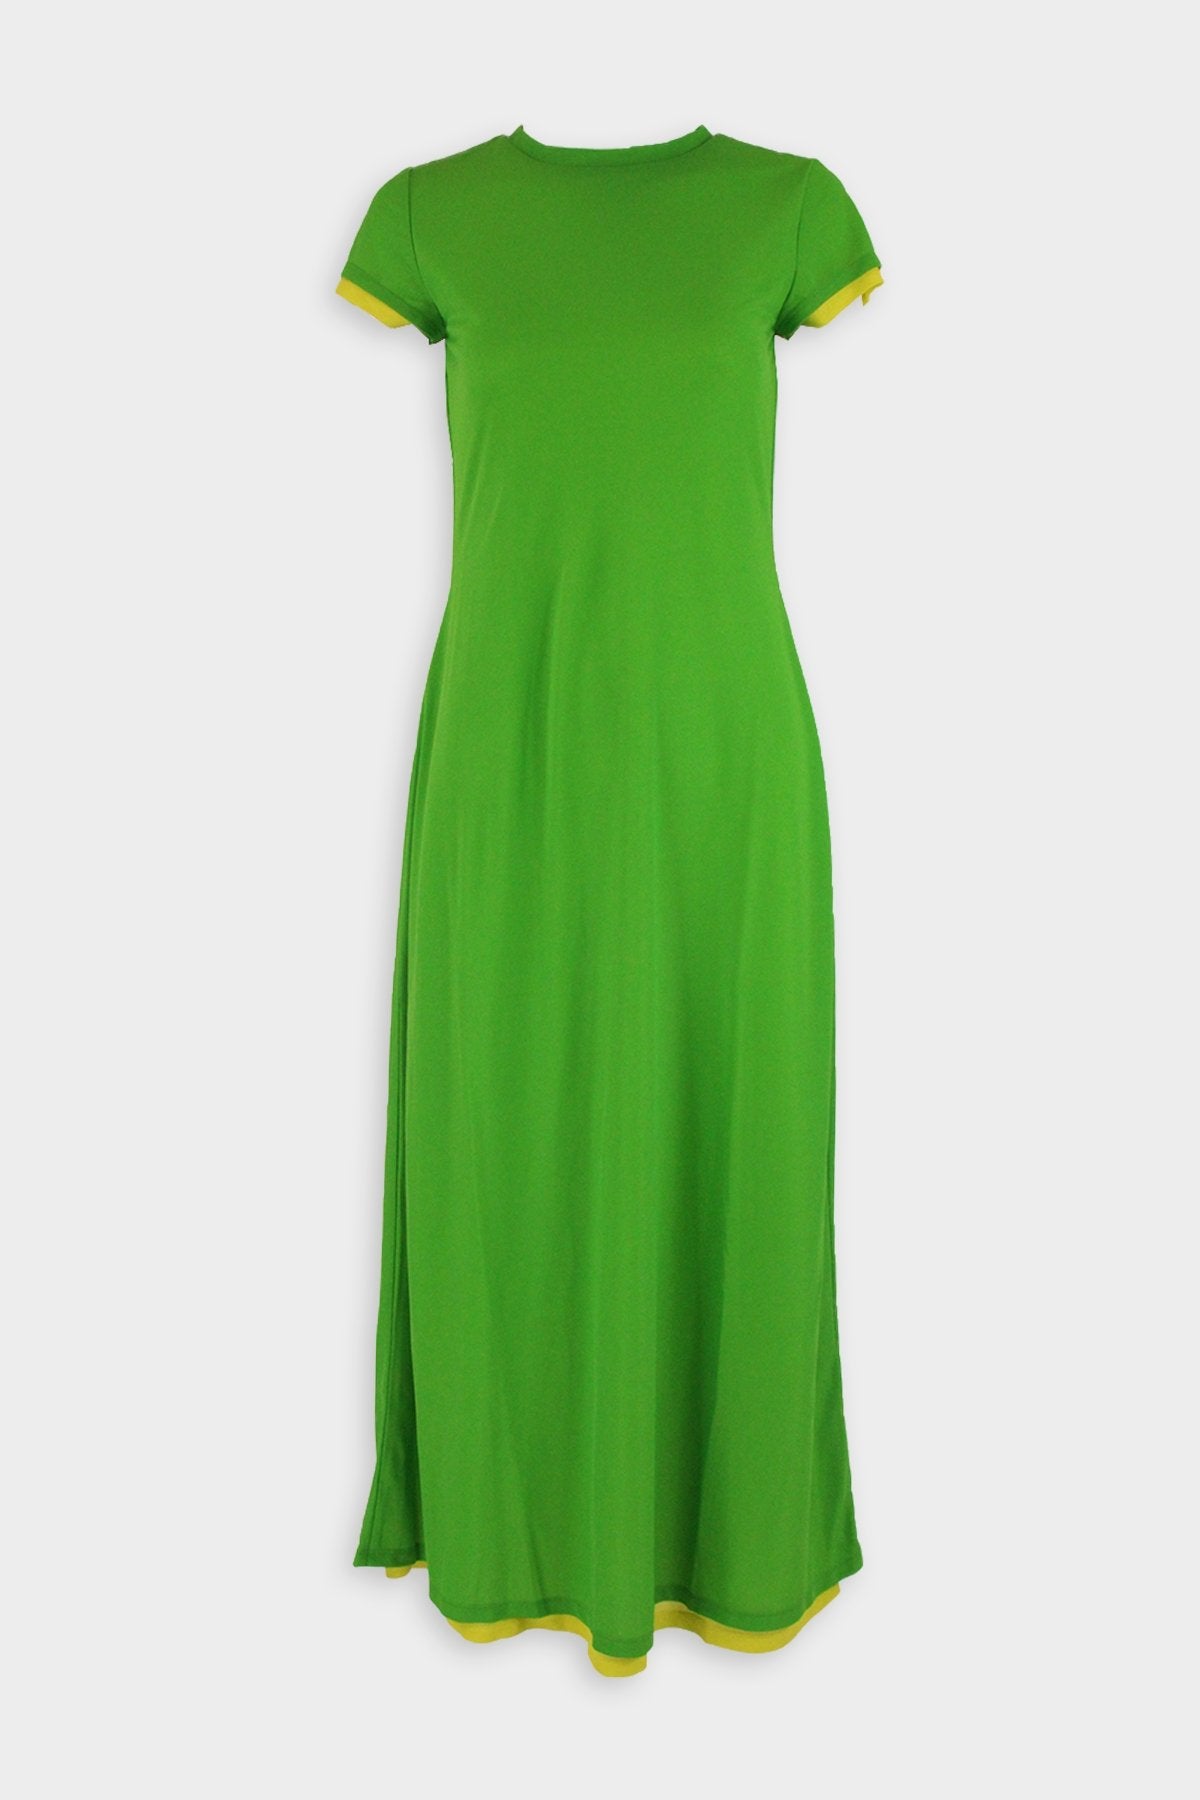 Tove Dress in Grass Green - shop-olivia.com